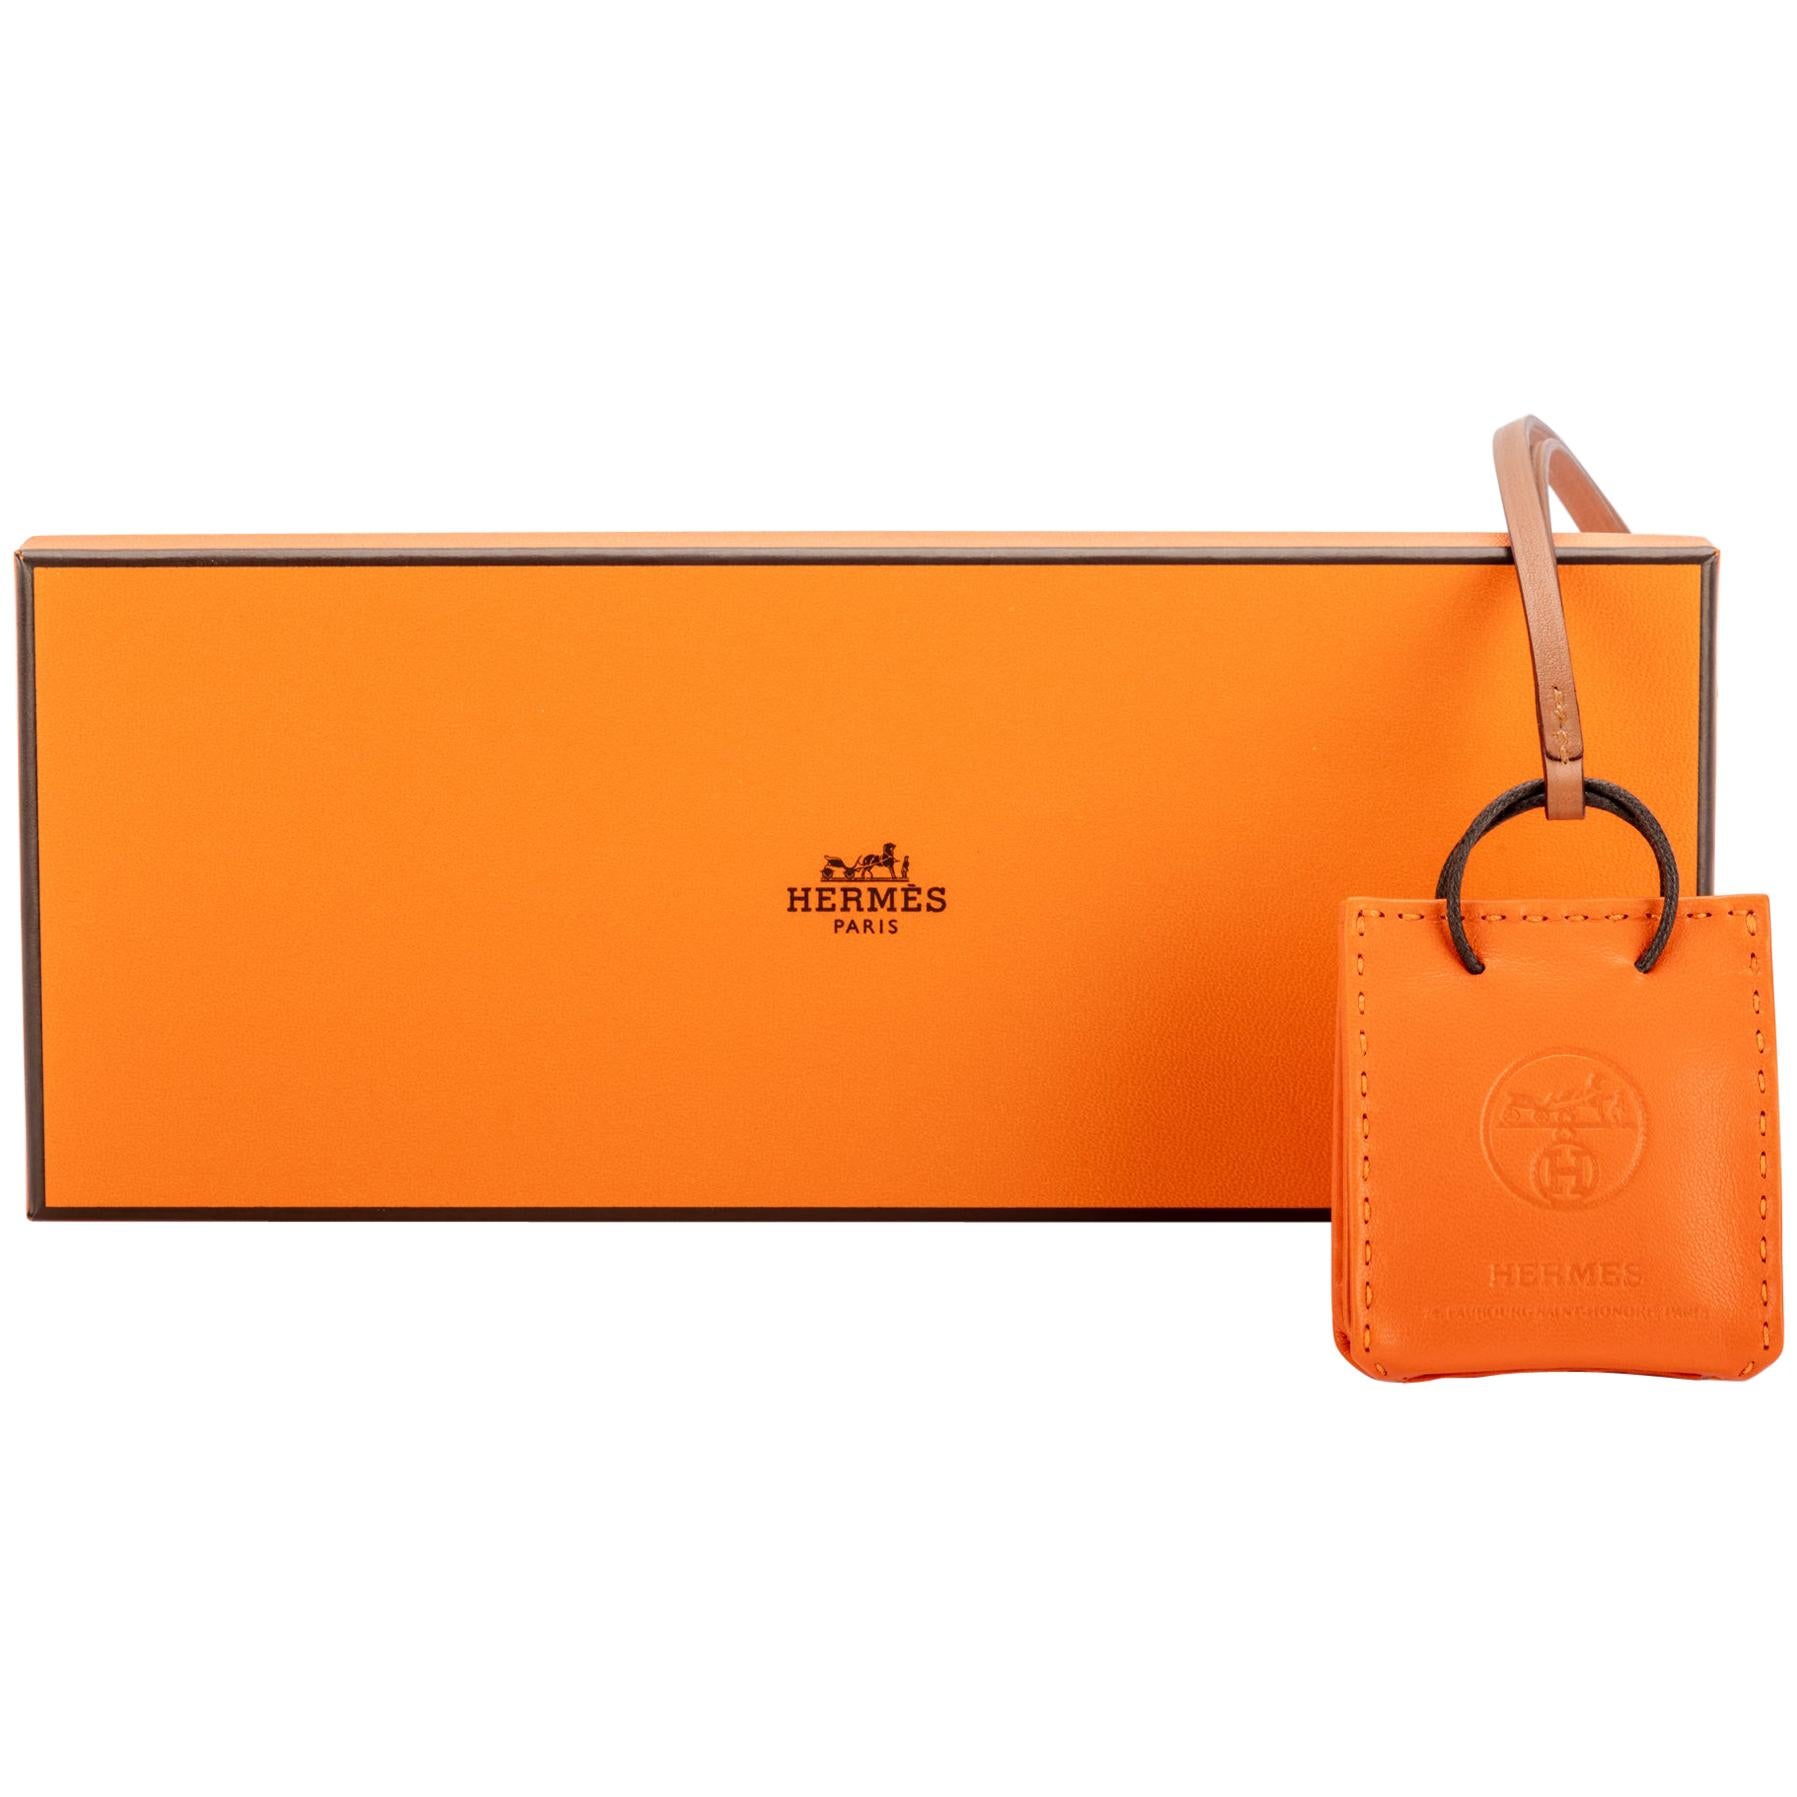 New in Box Hermes Rare Orange Bag Charm